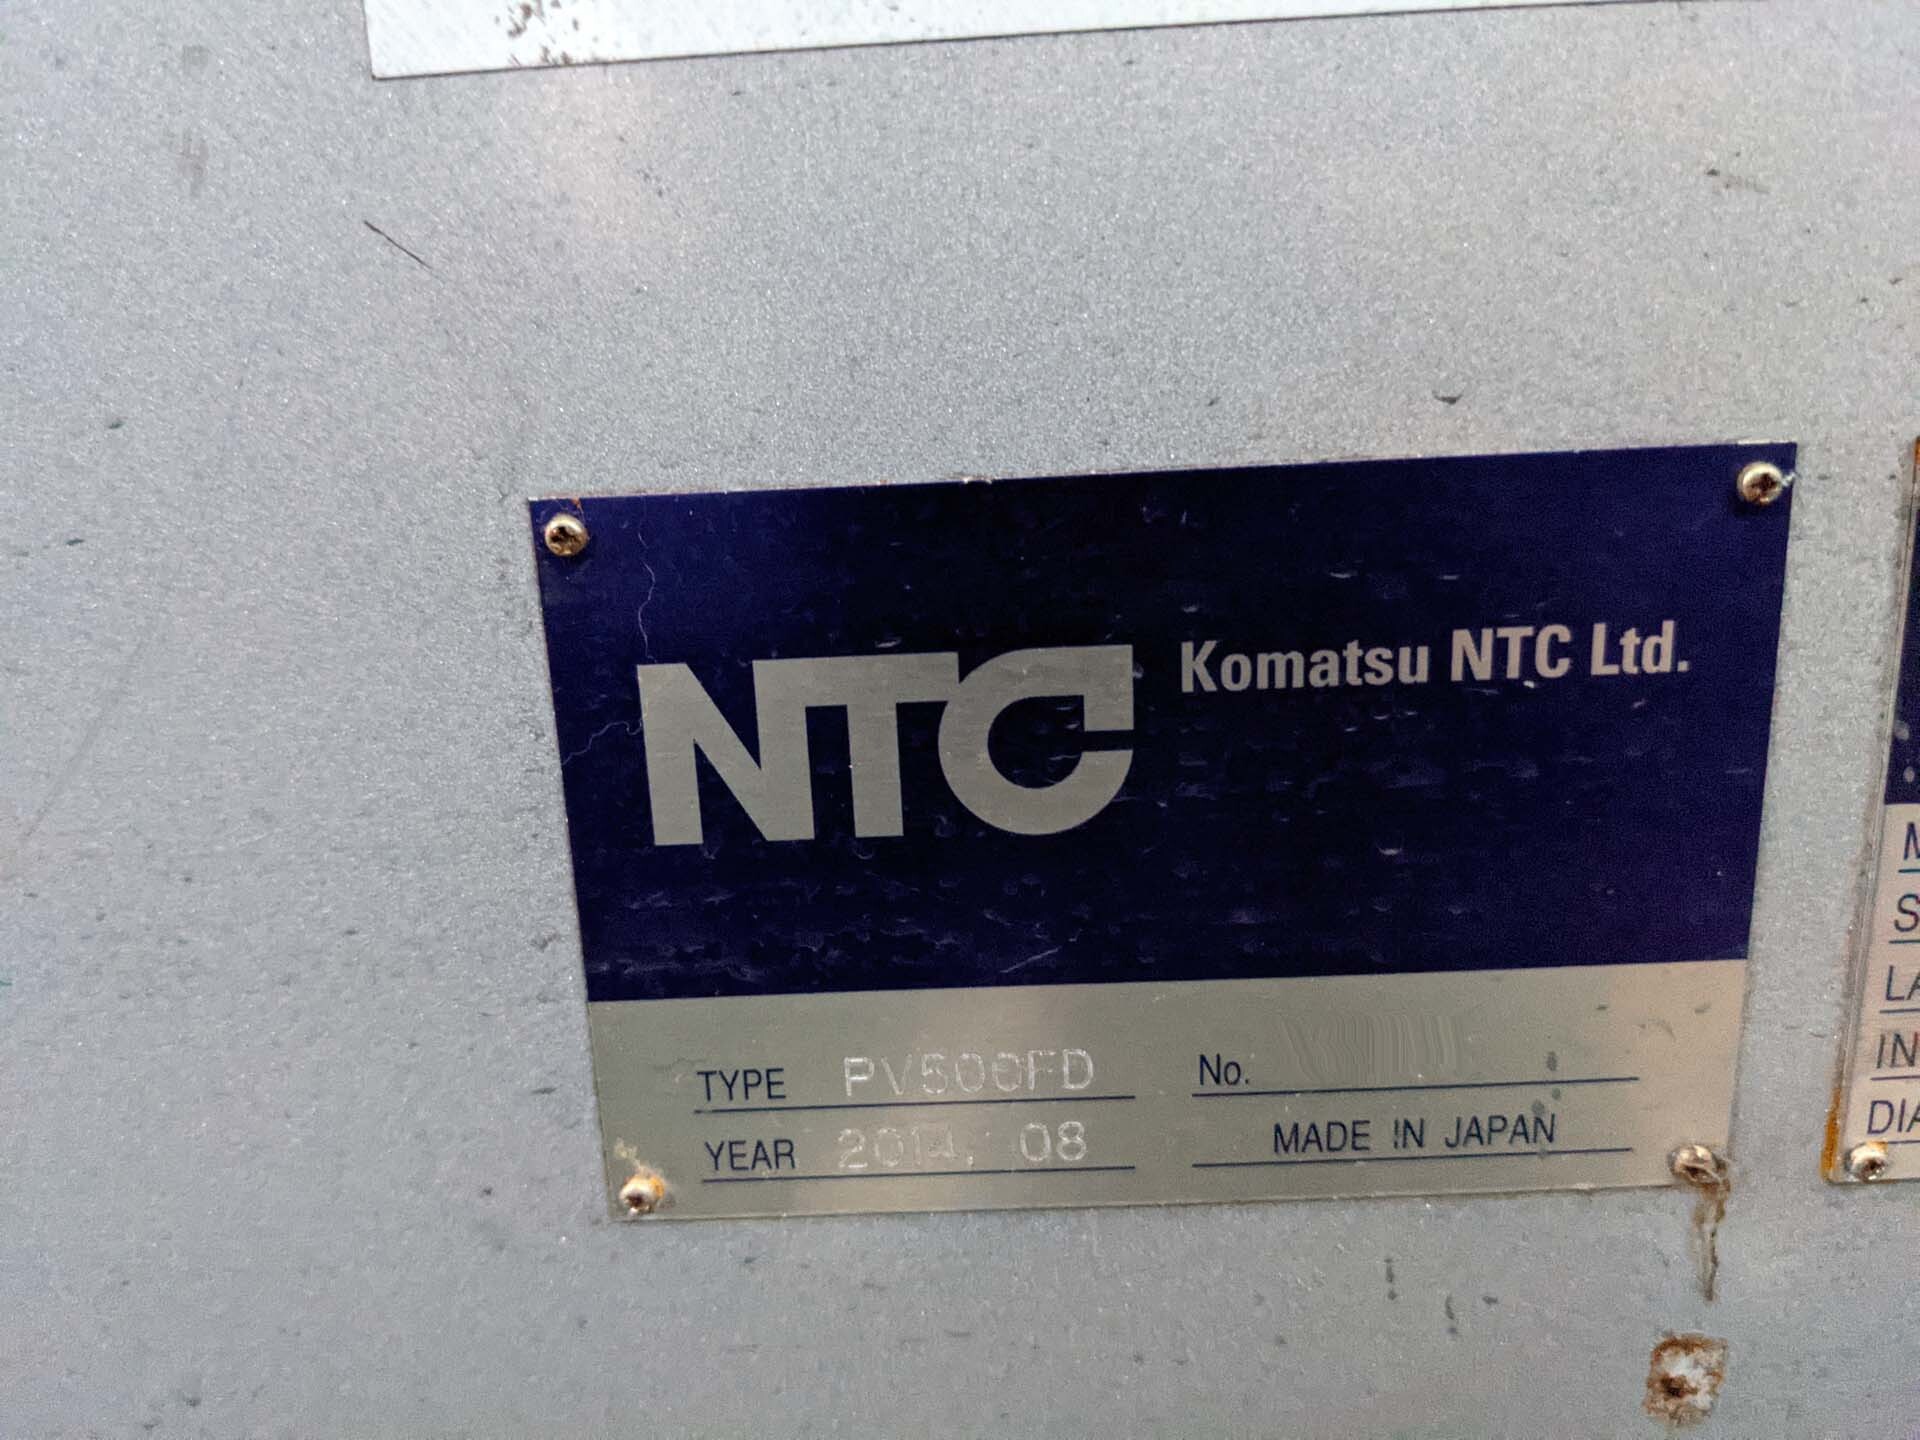 Photo Used NTC / KOMATSU NTC PV500FD For Sale